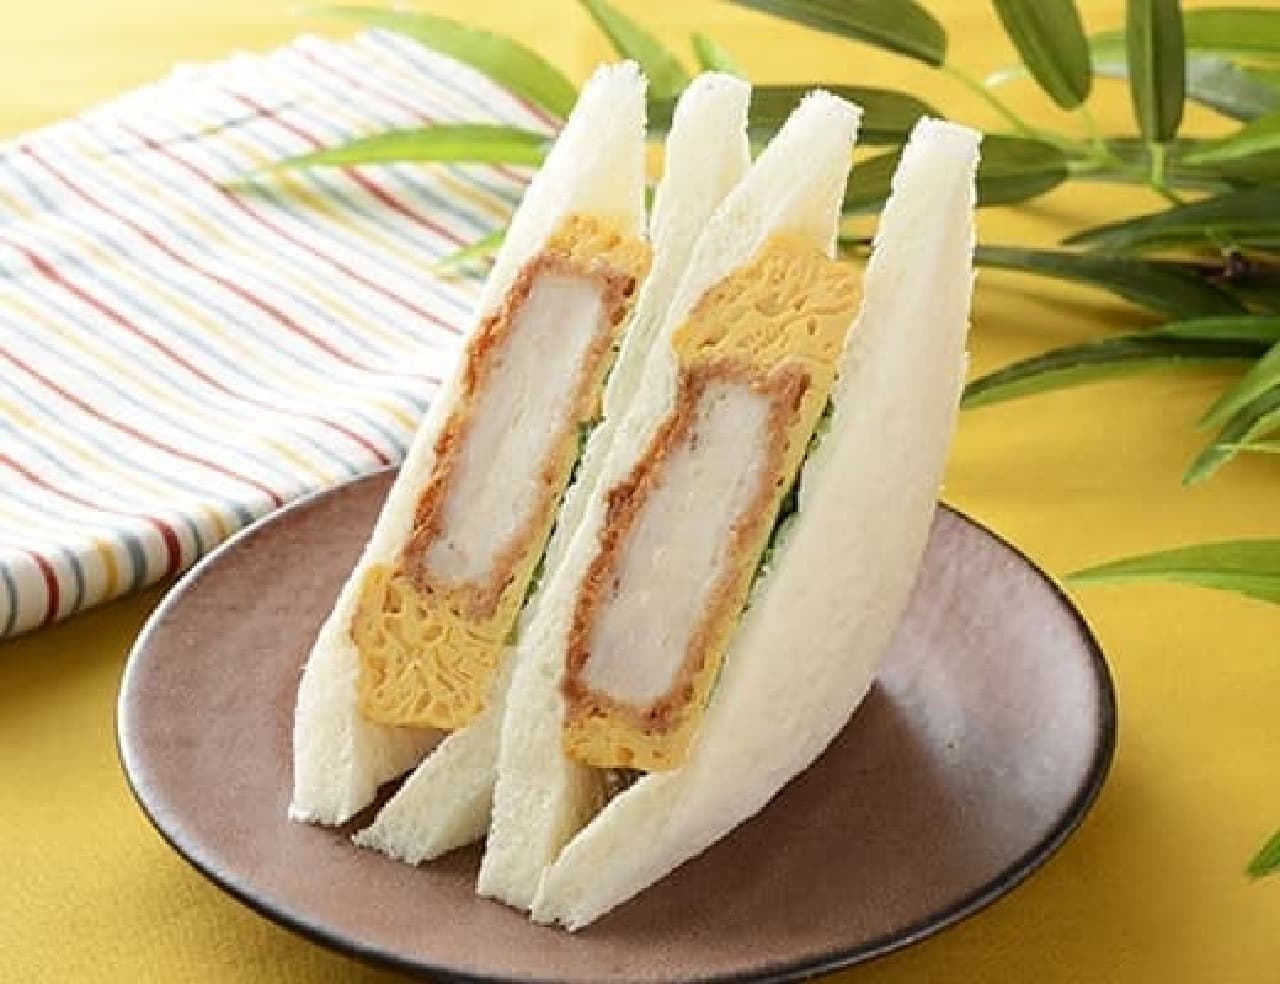 Lawson "Katsutoji Sandwich with Trefoil"